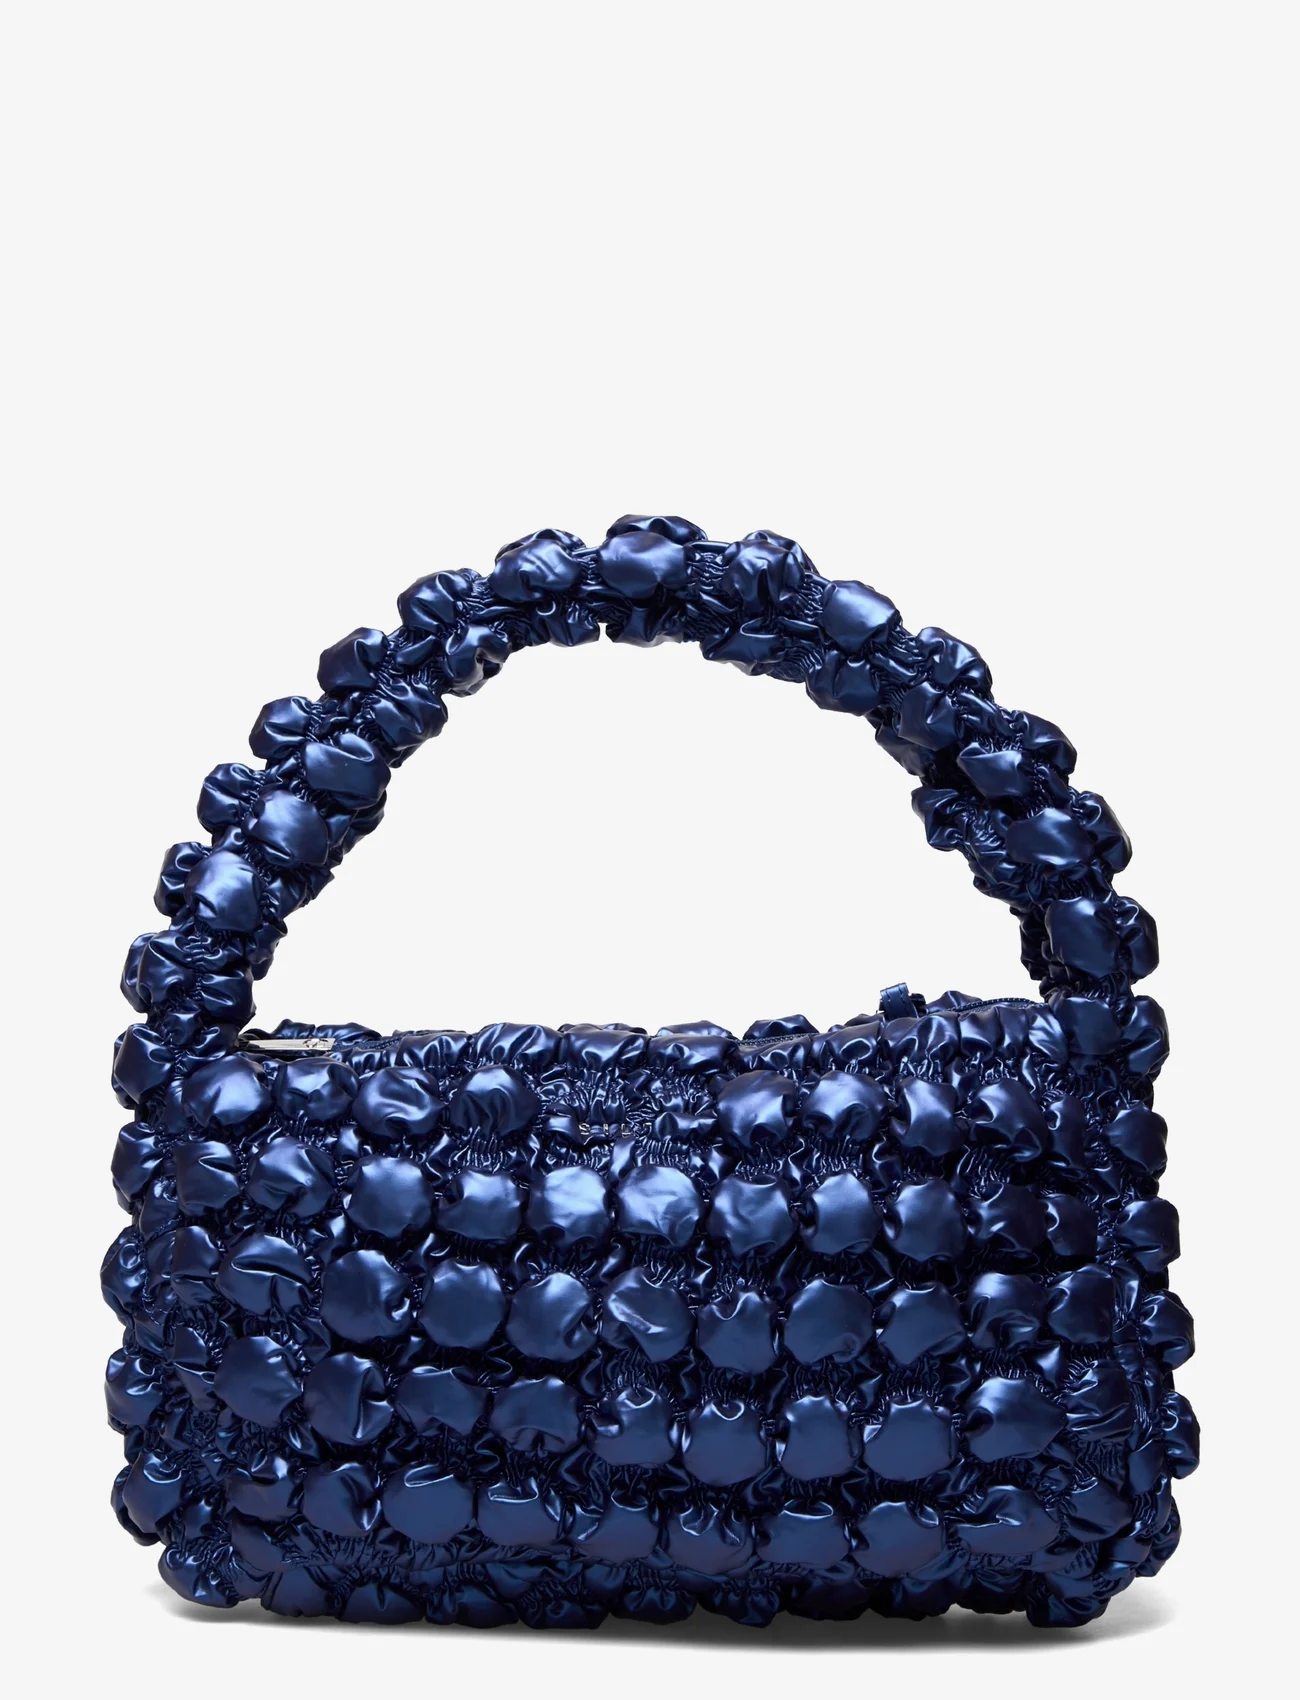 Silfen - Leila Shoulder Bag - verjaardagscadeaus - metallic blue - 0